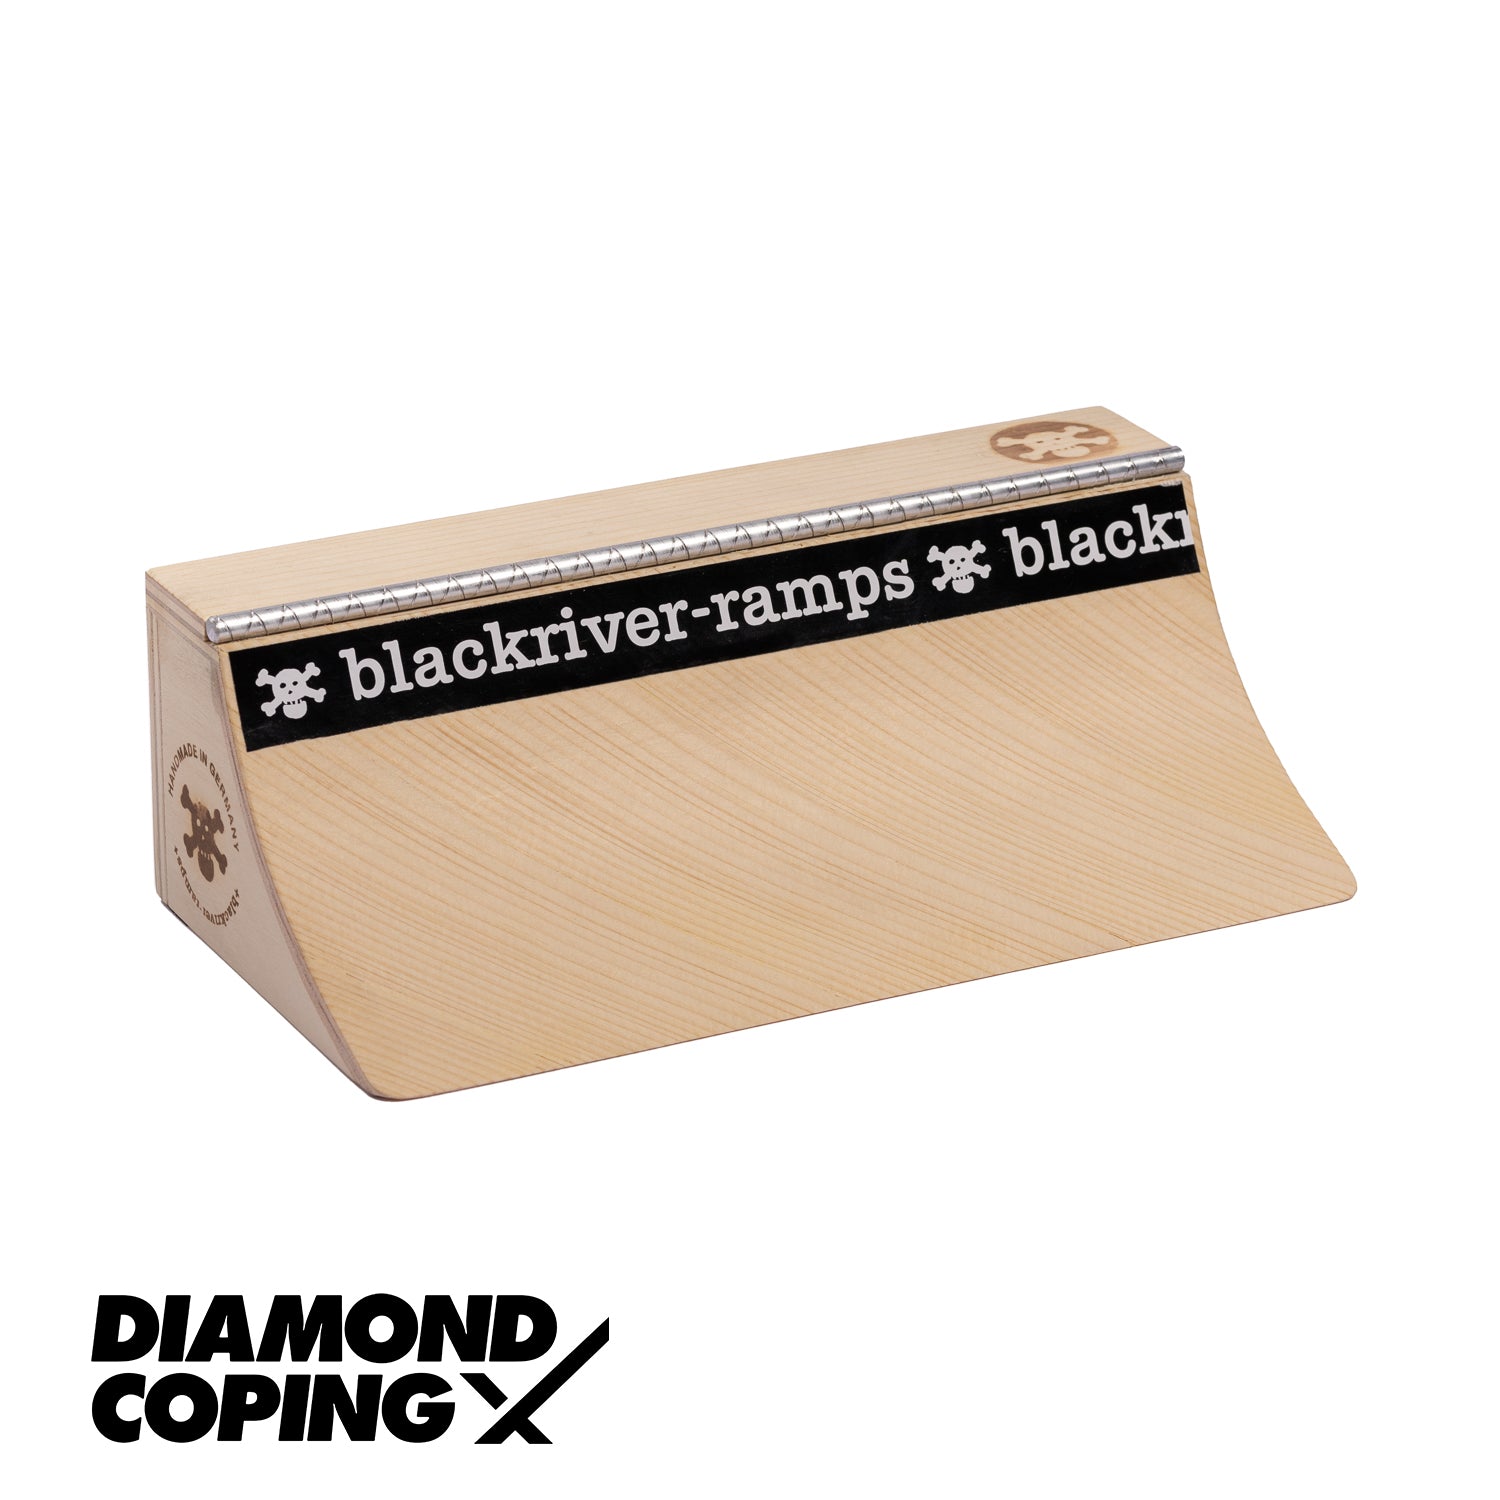 Blackriver ramps - Pocket Quarter XL Diamond Coping